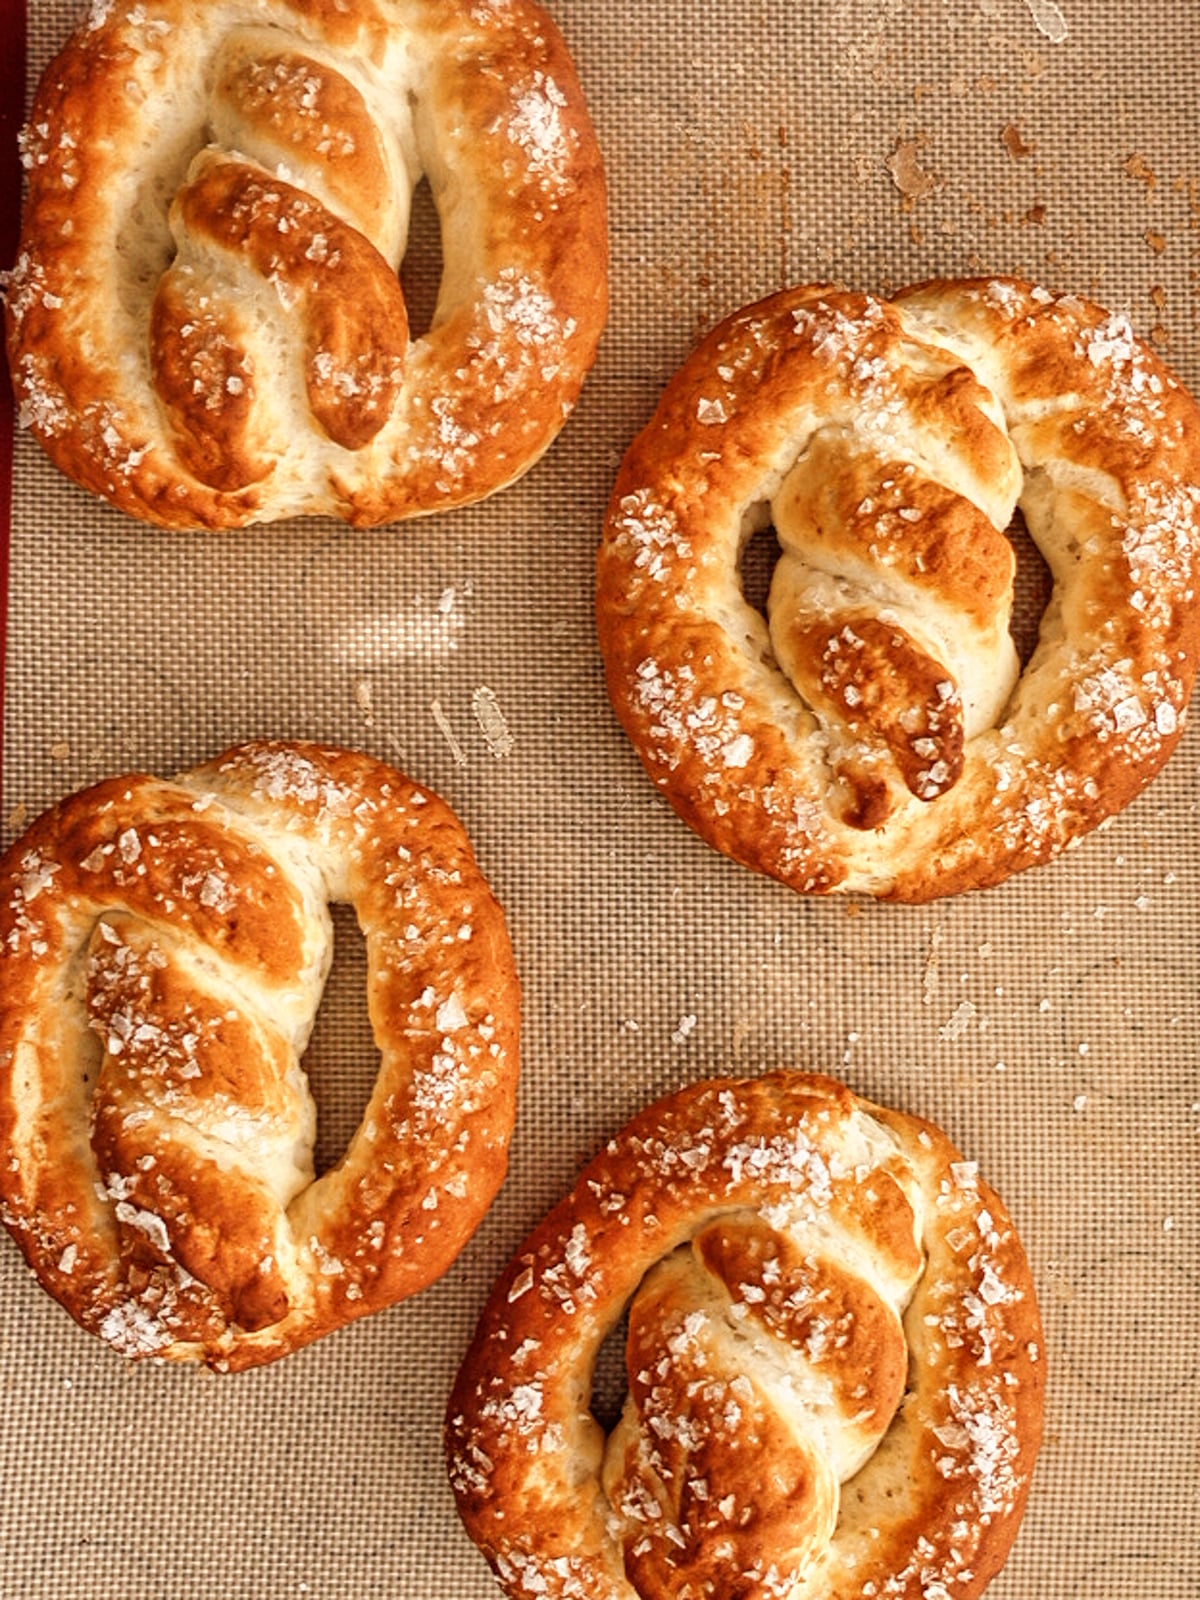 four pretzels on silicone baking mat.